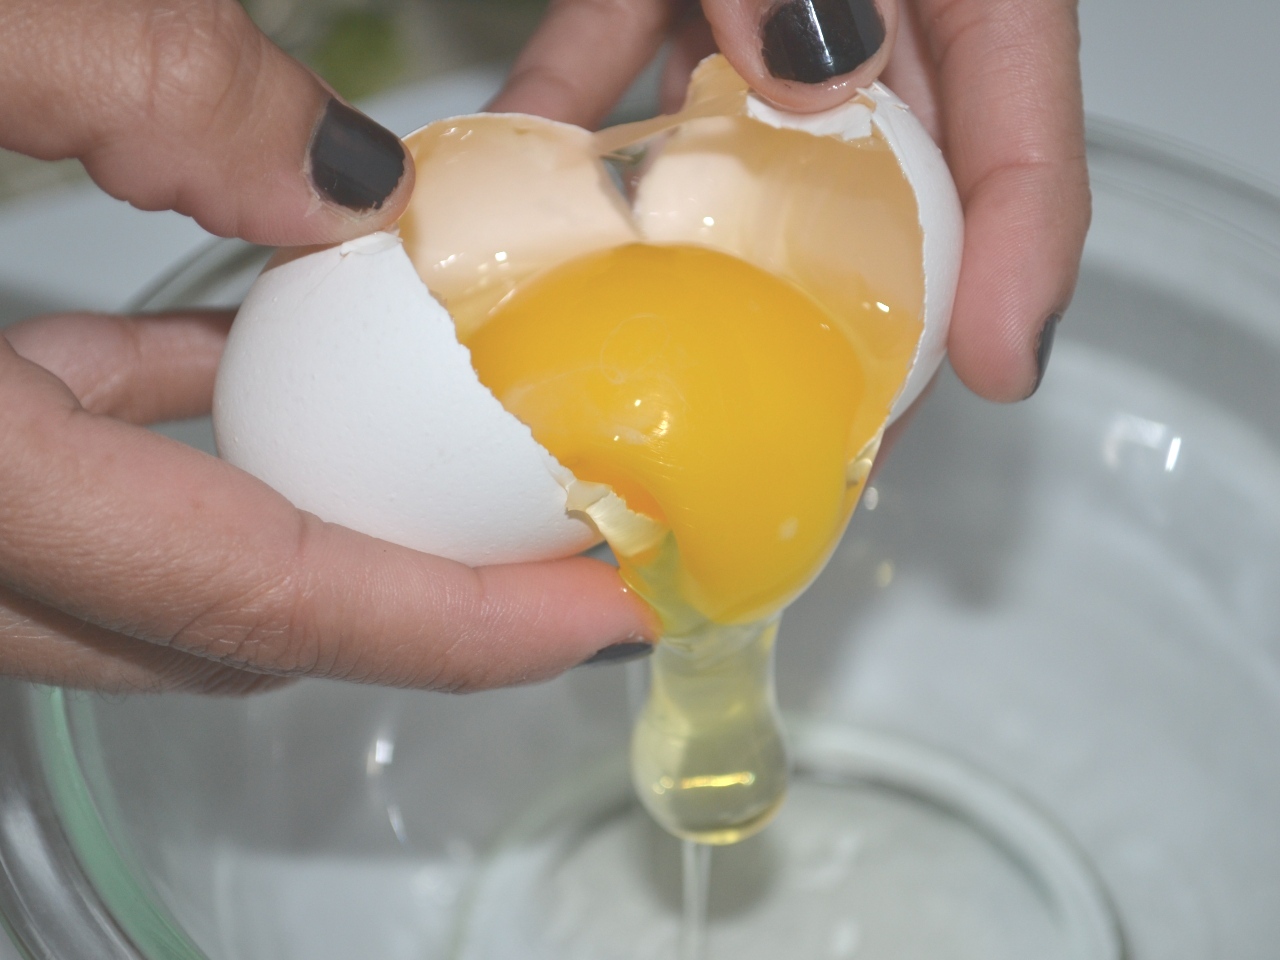 Cracking an egg photo